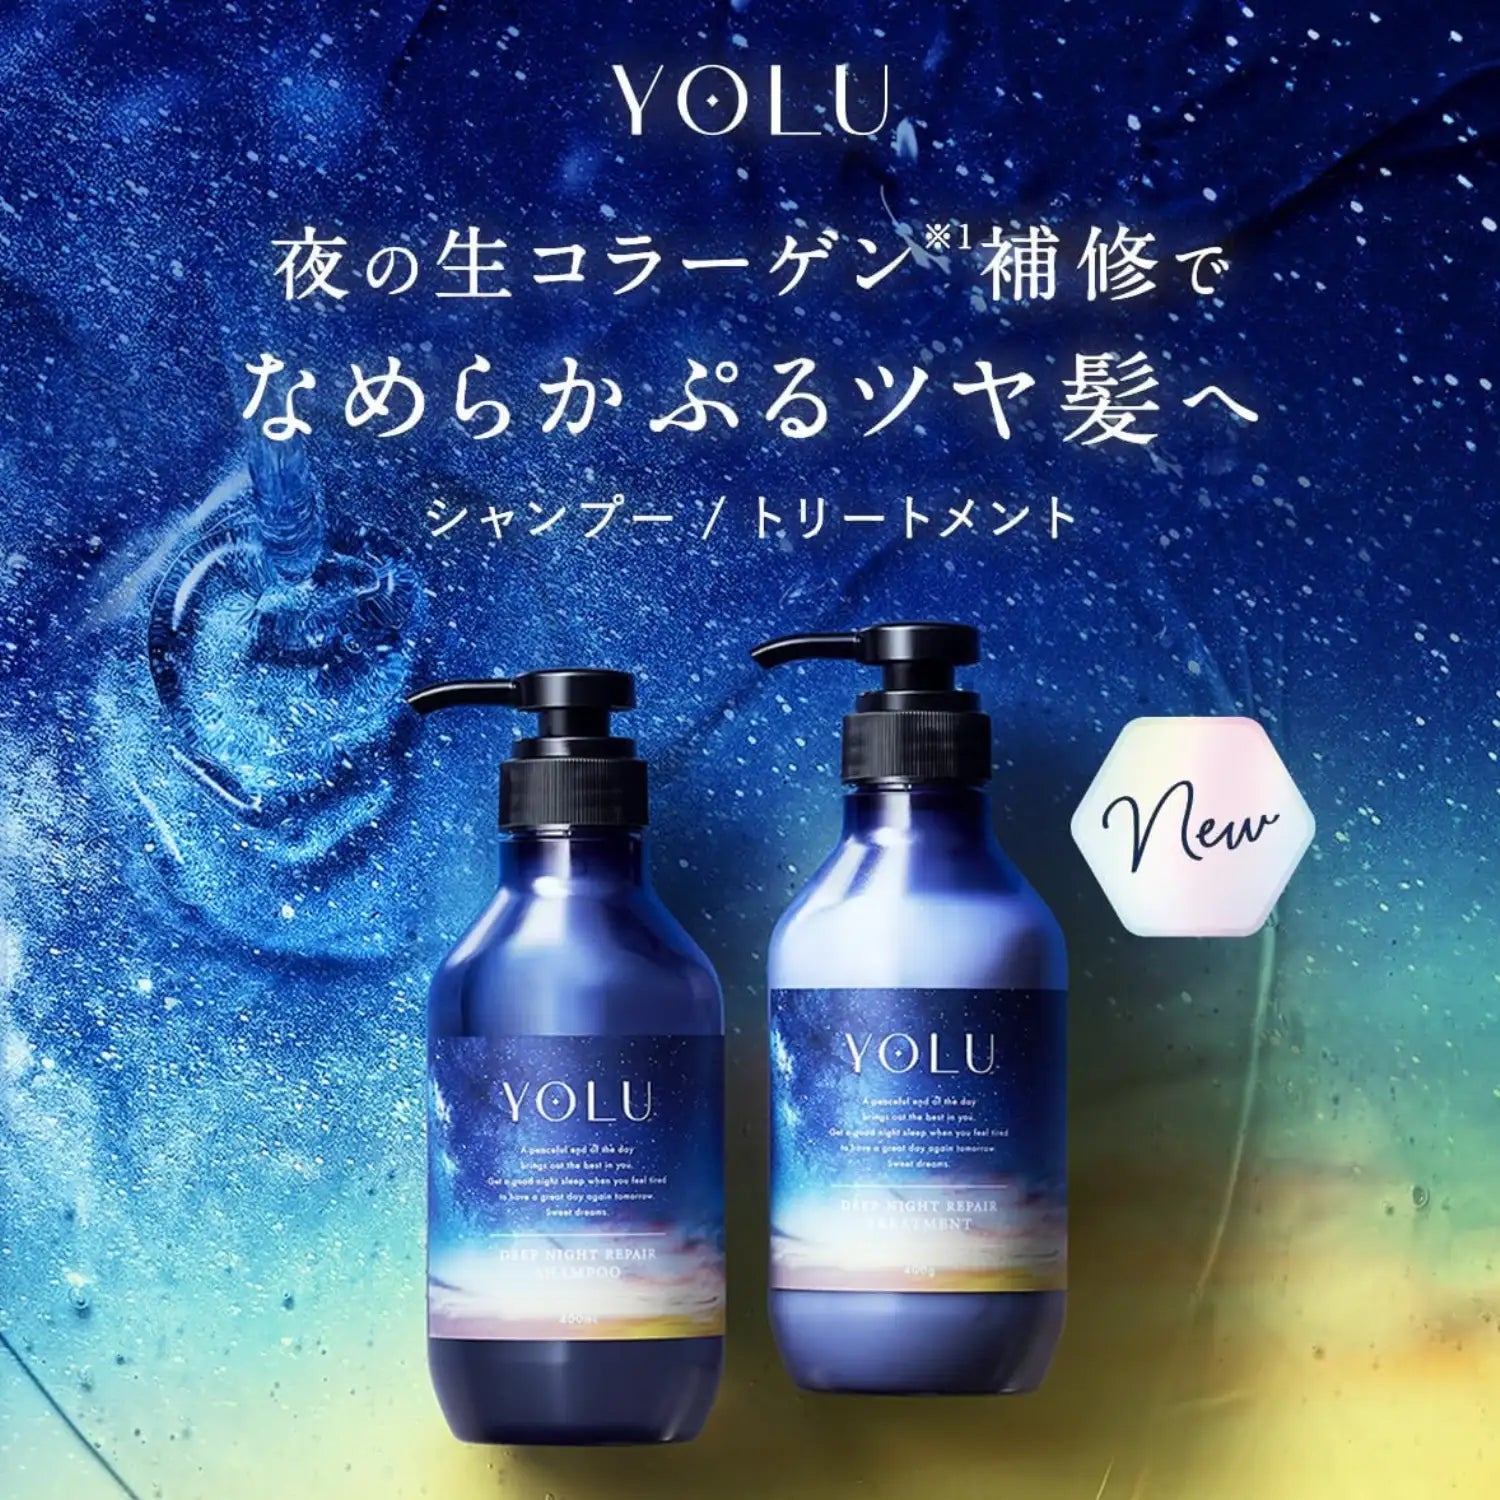 YOLU Deep Night Repair Shampoo, Treatment & Hair Mask Set (475ml Each + 145g) - Buy Me Japan